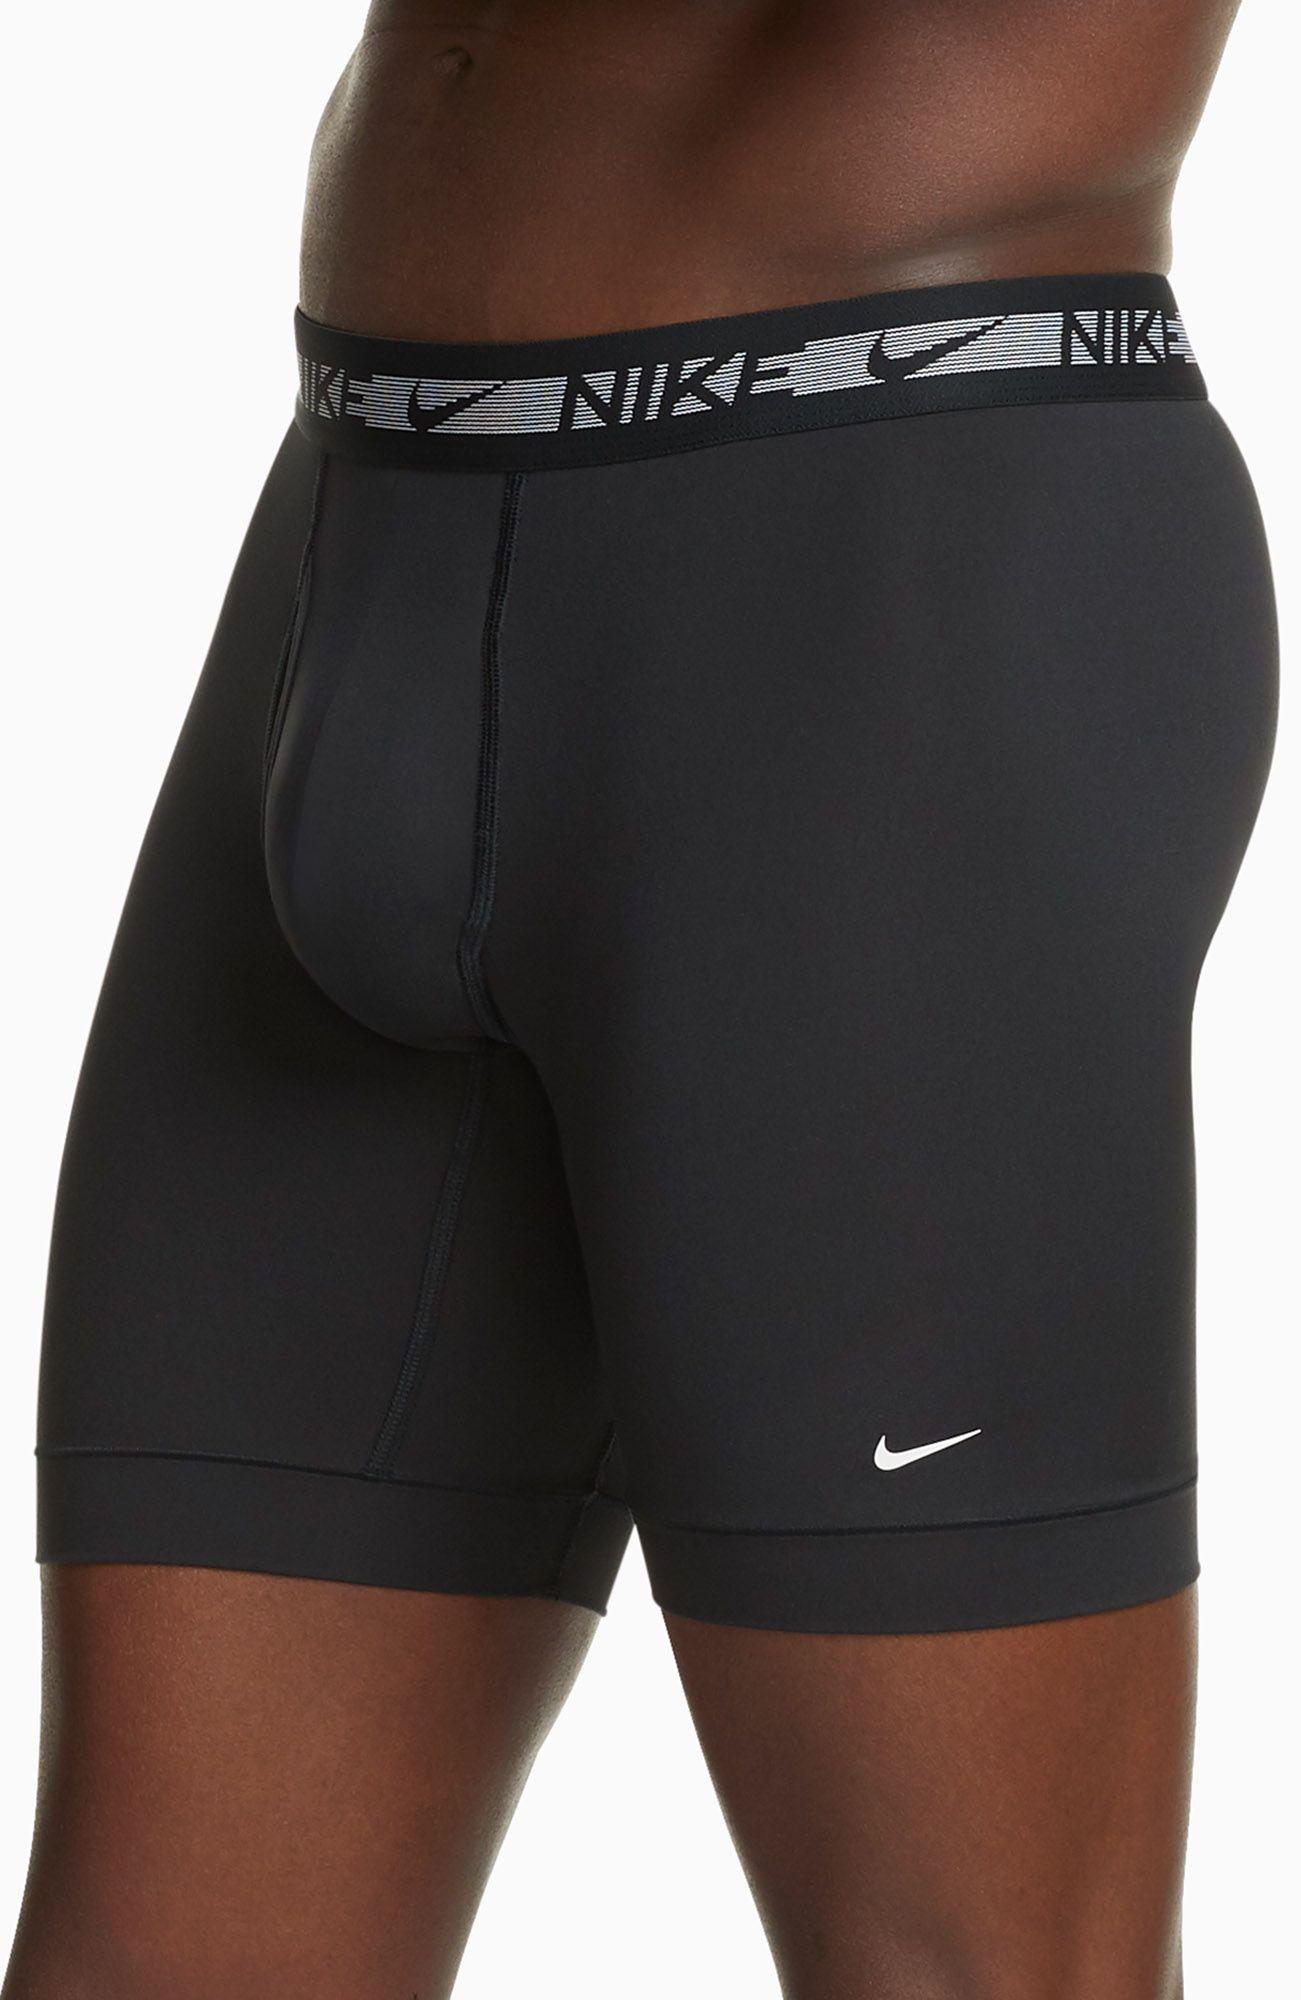 Nike Flex Micro Long Boxer Briefs – 3 Pack in Black for Men - Lyst